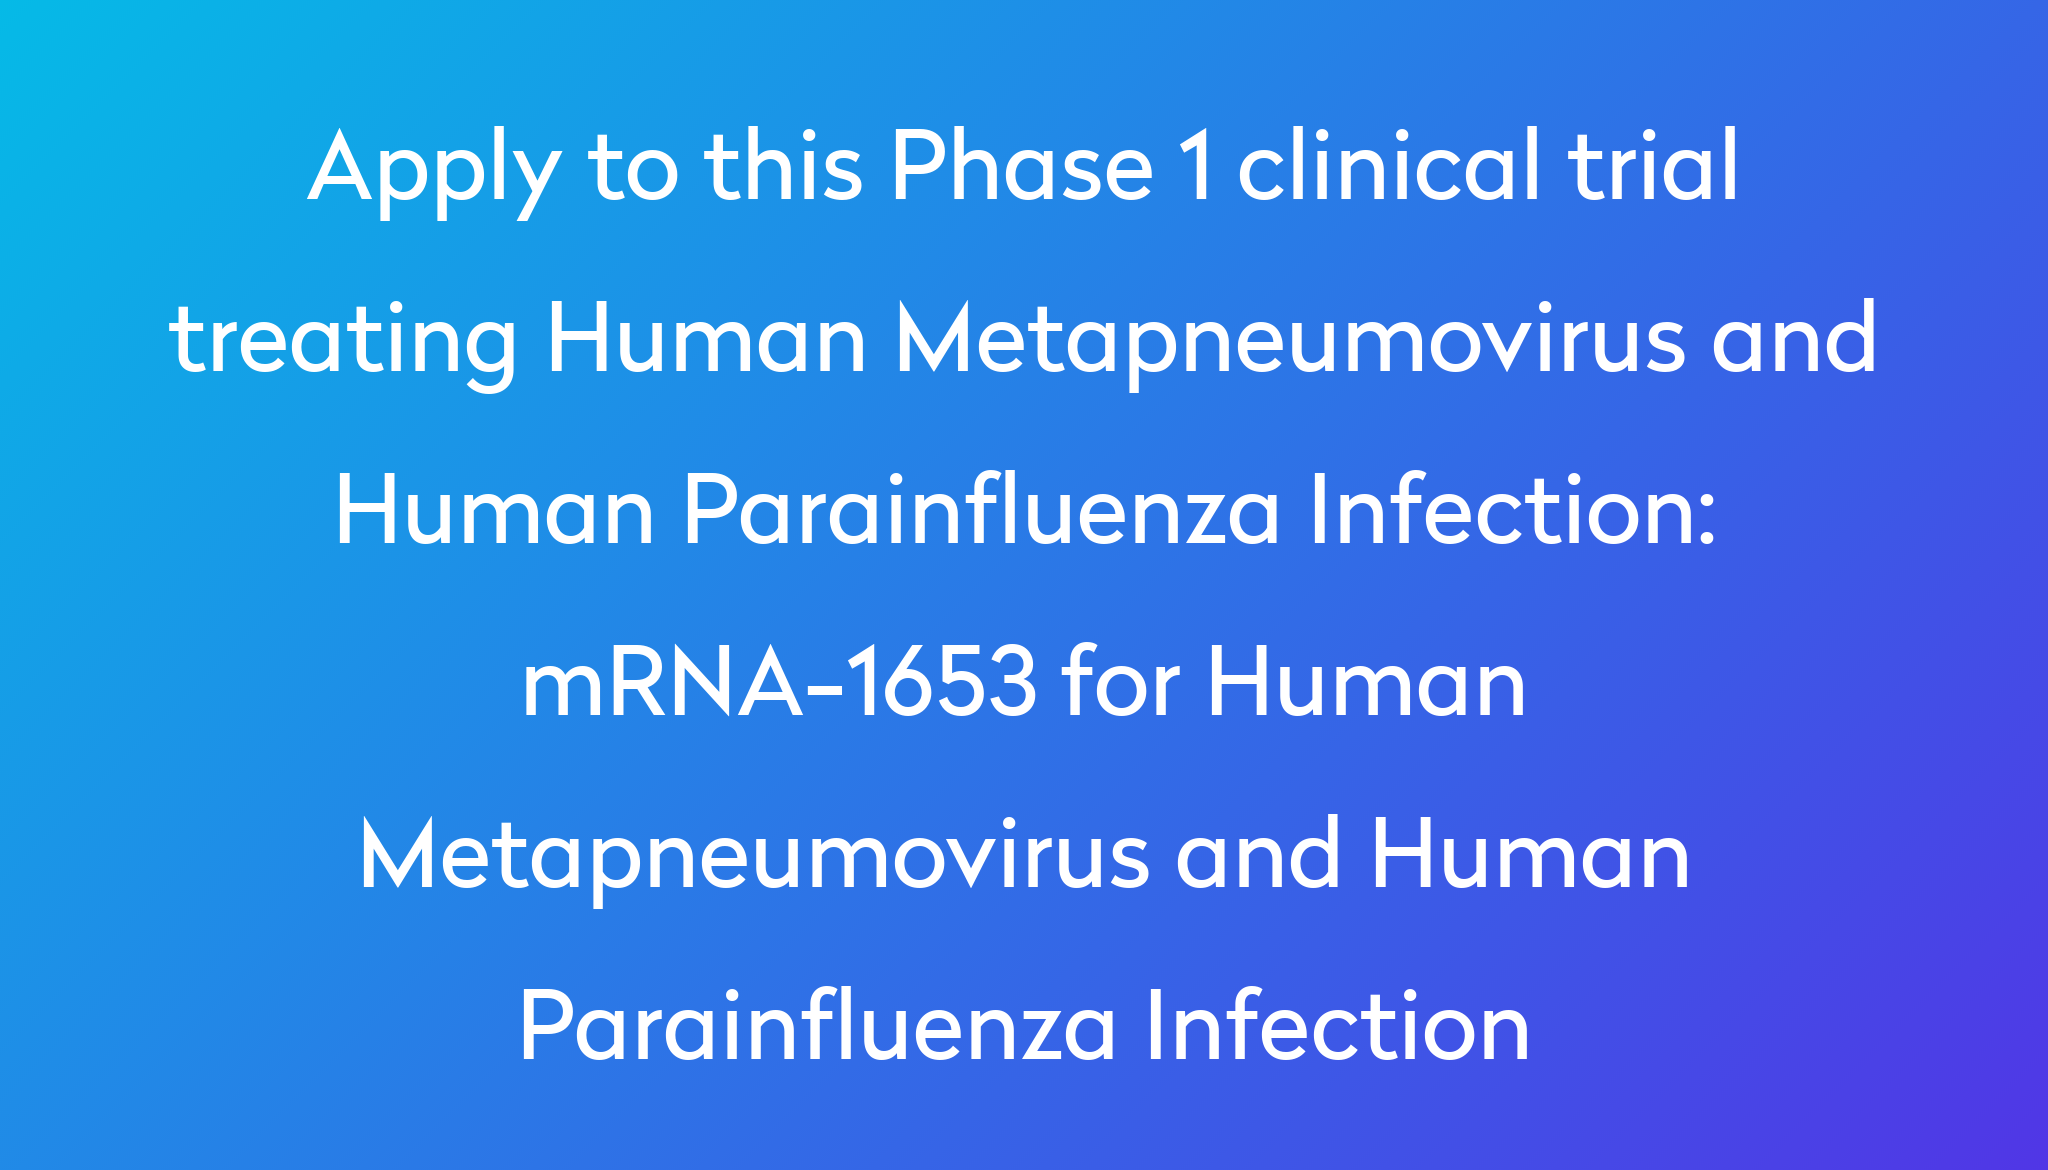 mRNA1653 for Human Metapneumovirus and Human Parainfluenza Infection